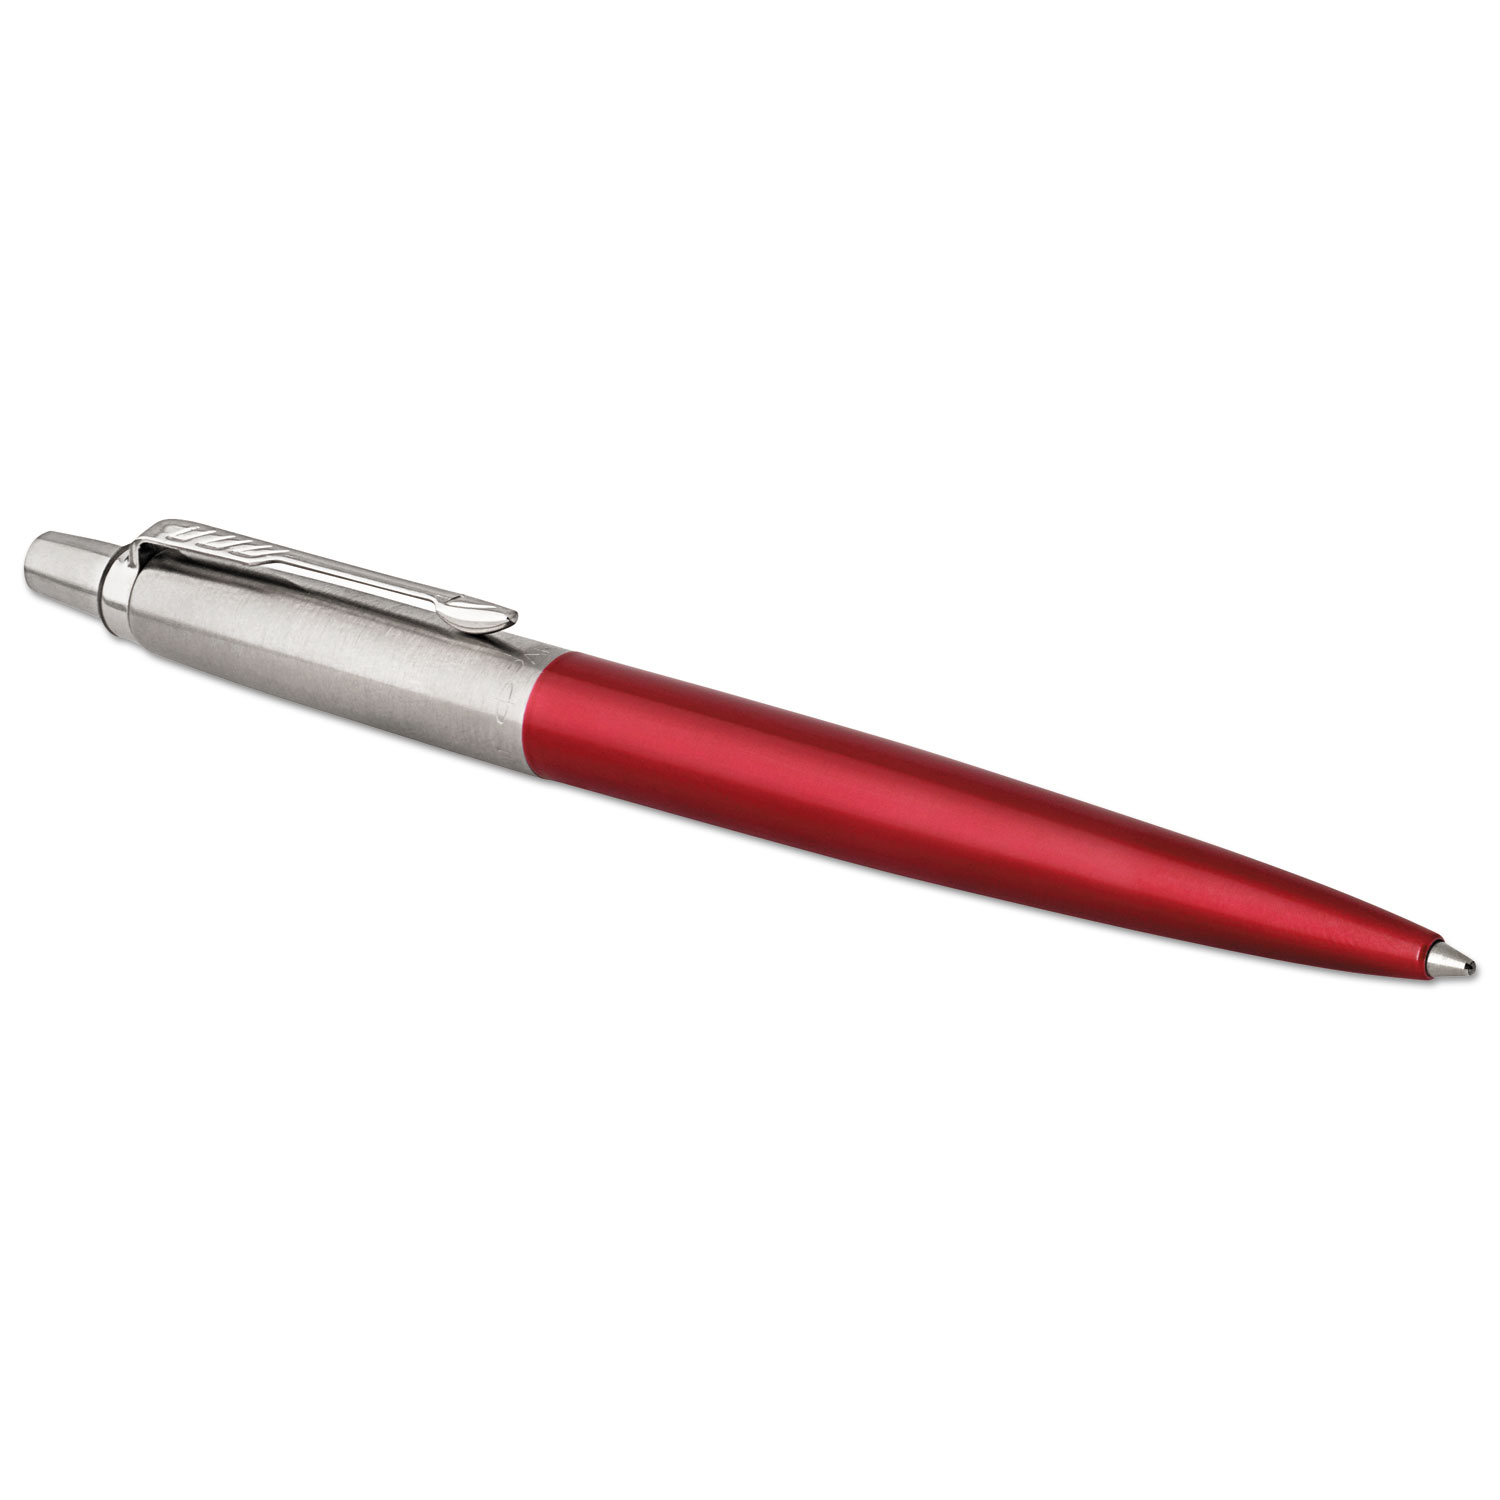 Jotter Retractable Gel Pen Gift Box, Medium 0.7mm, Black Ink, Red Barrel